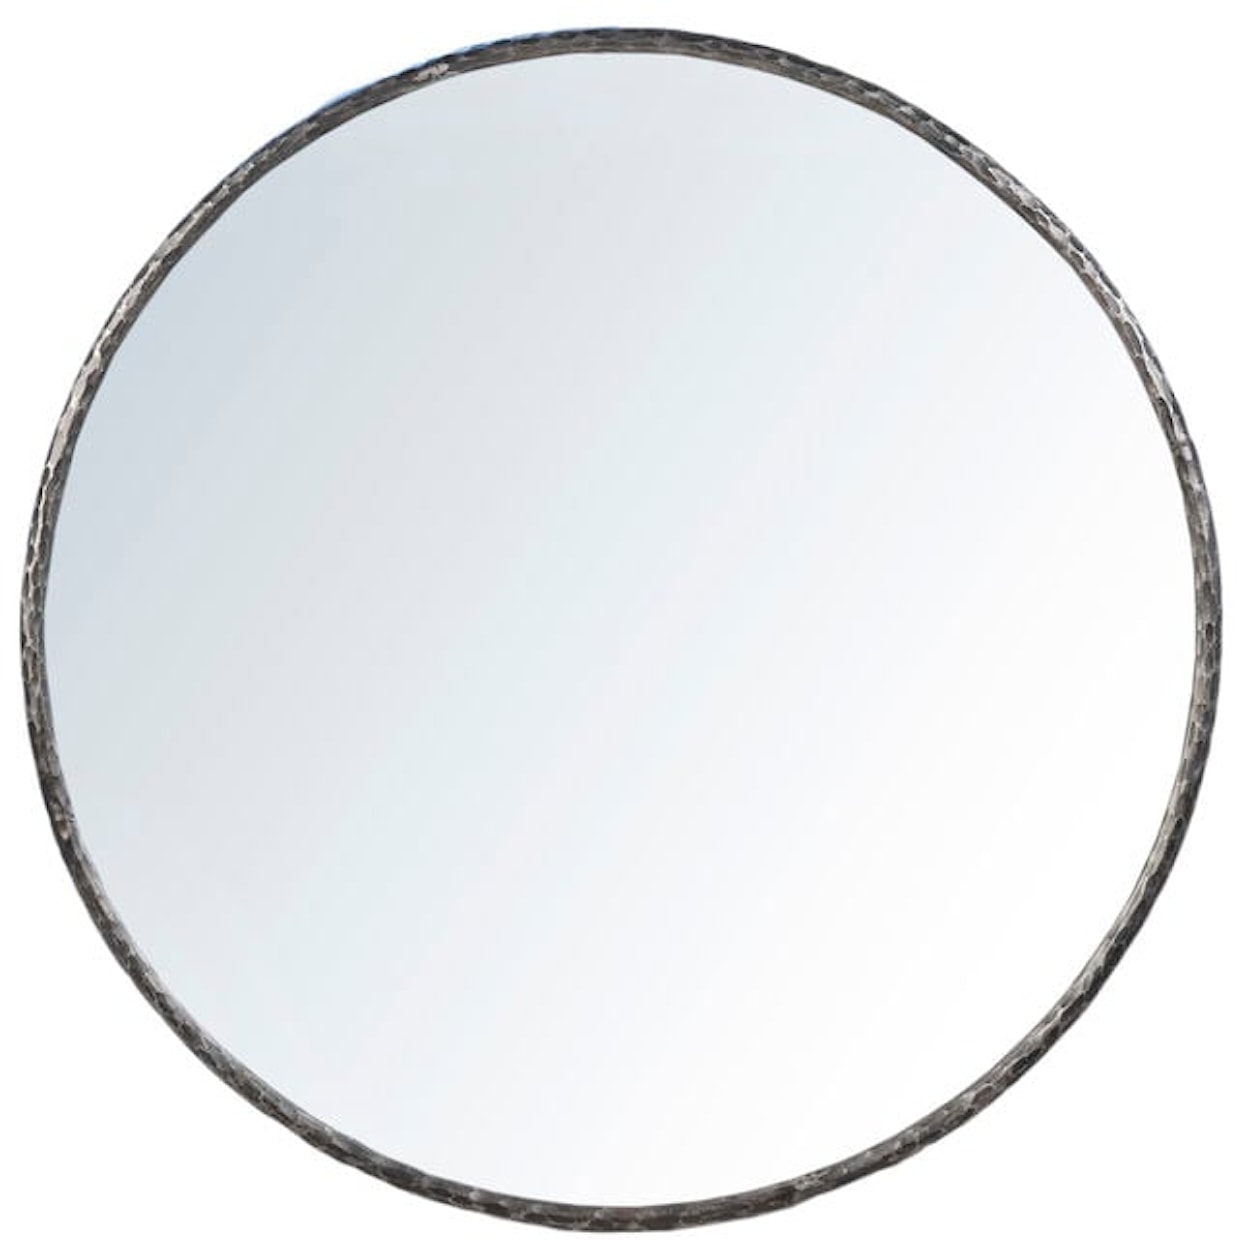 Dovetail Furniture Mirrors Wall Mirrors